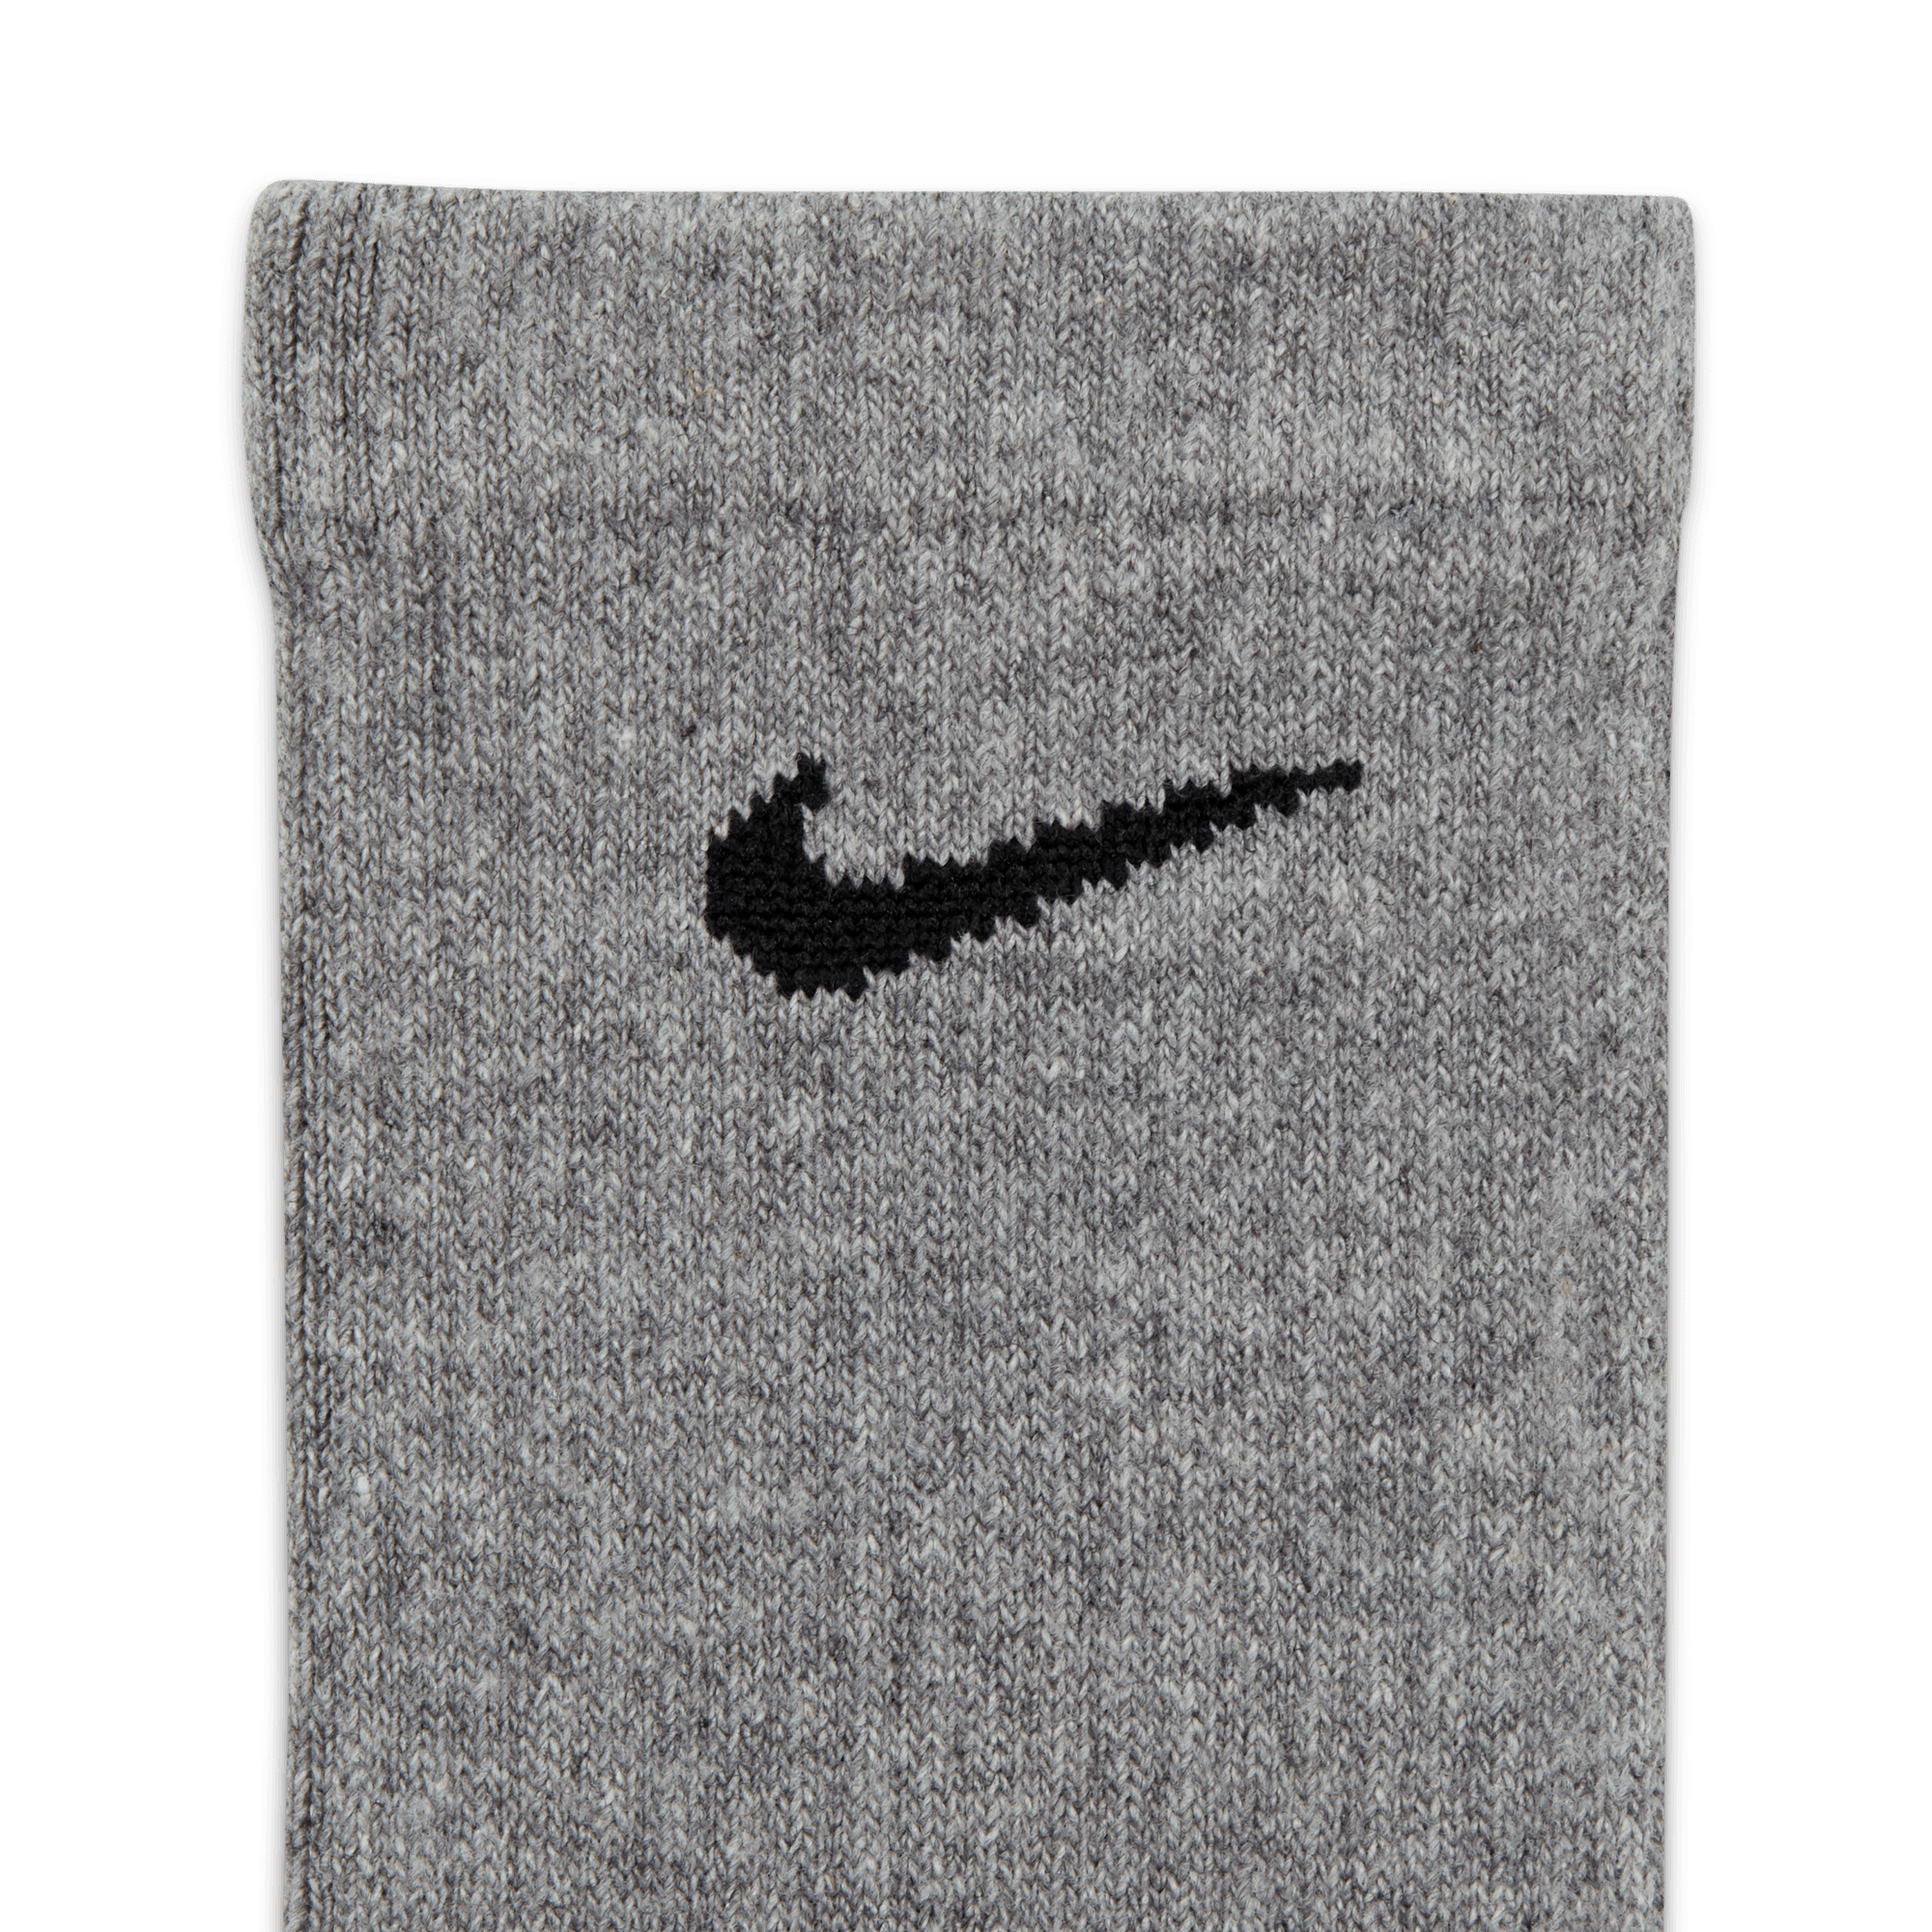 Nike Everyday Plus Cushioned Training Crew Socks (3 Pairs) SX6888-064